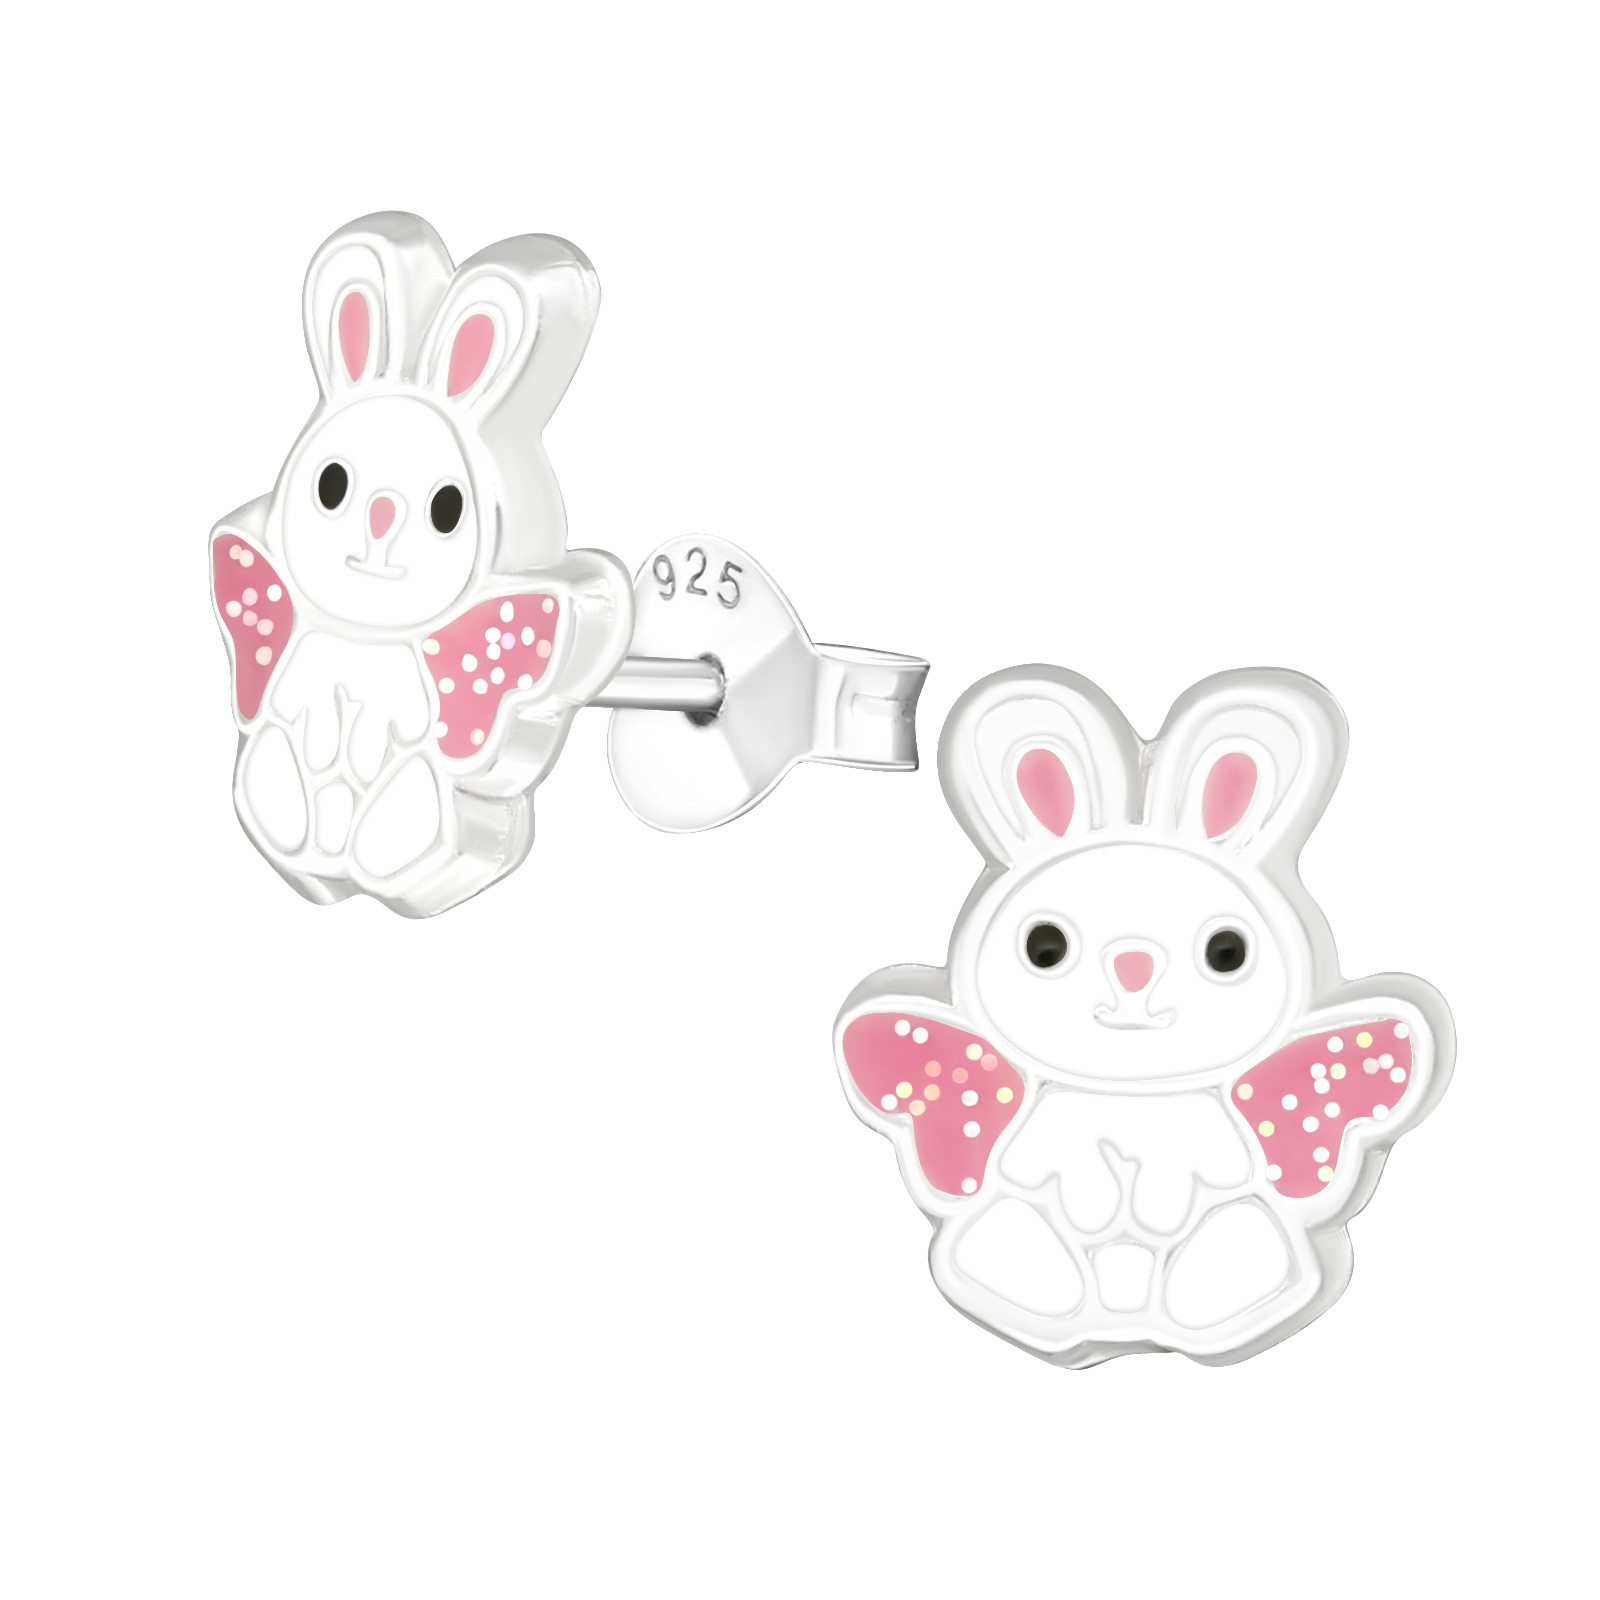 Girls rabbit earrings